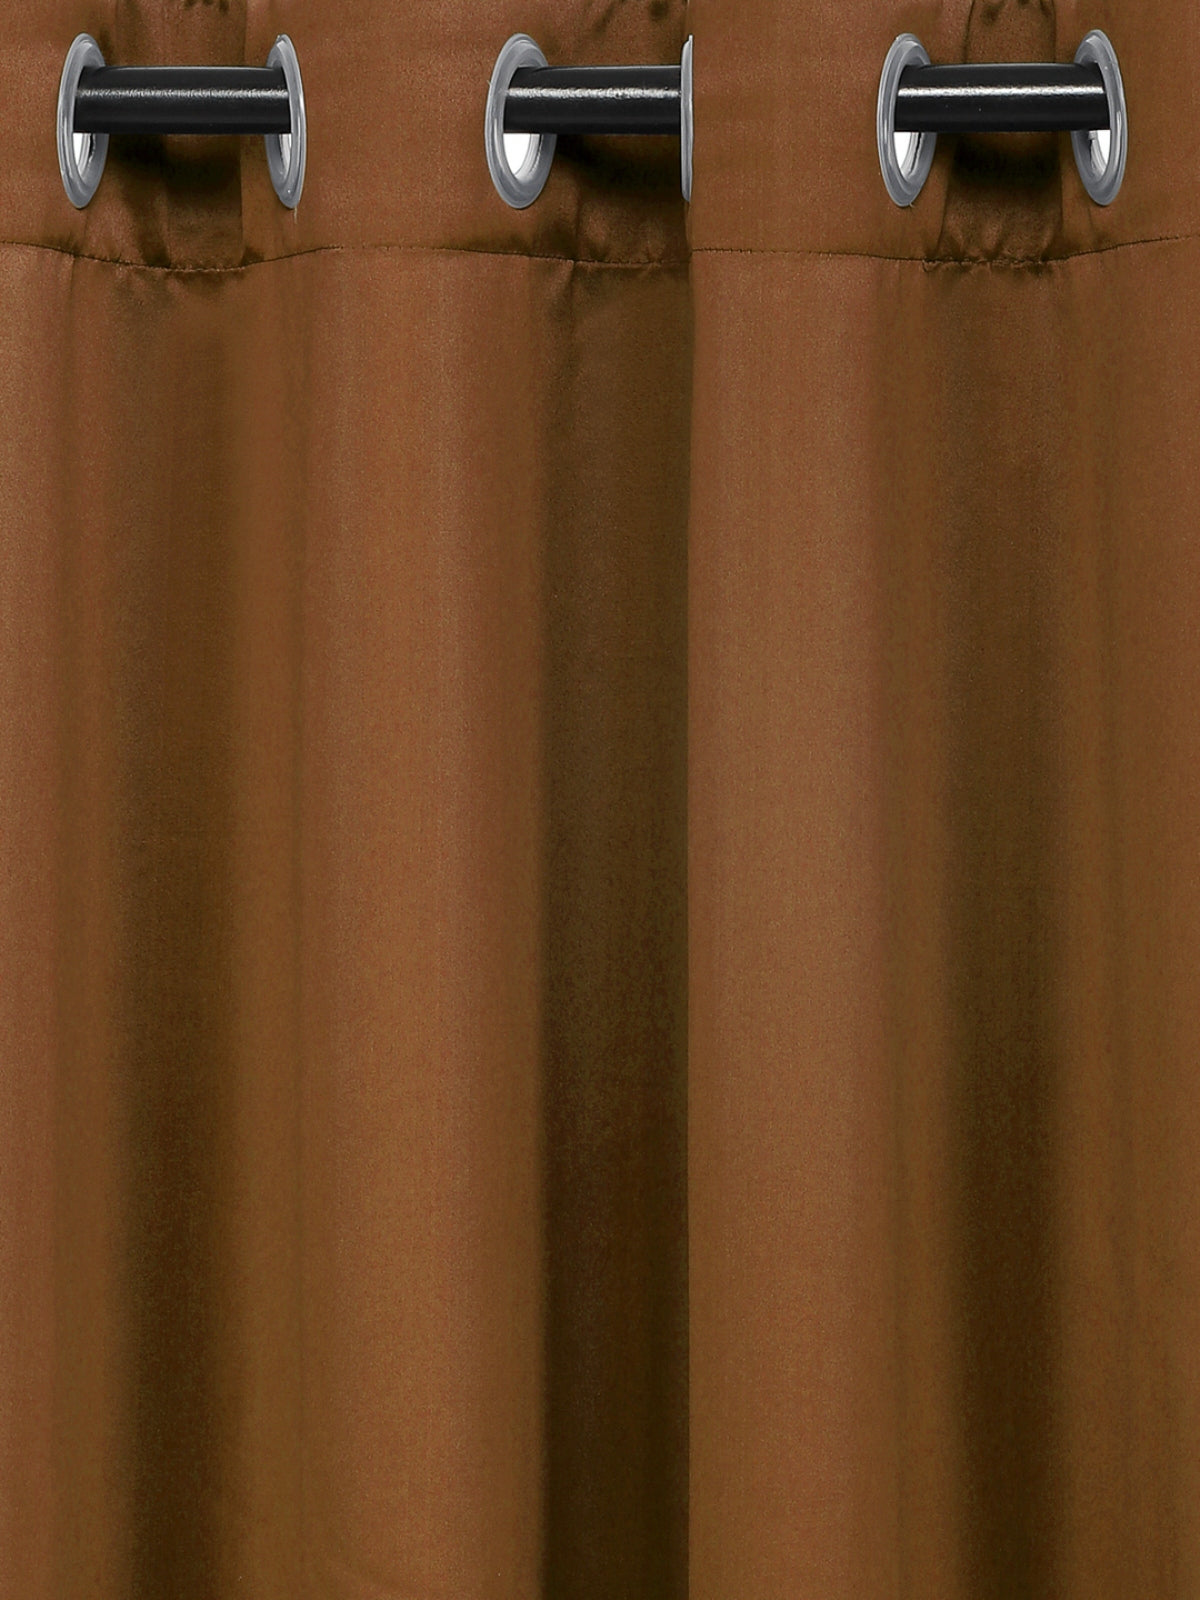 Romee Brown Solid Patterned Set of 2 Door Curtains